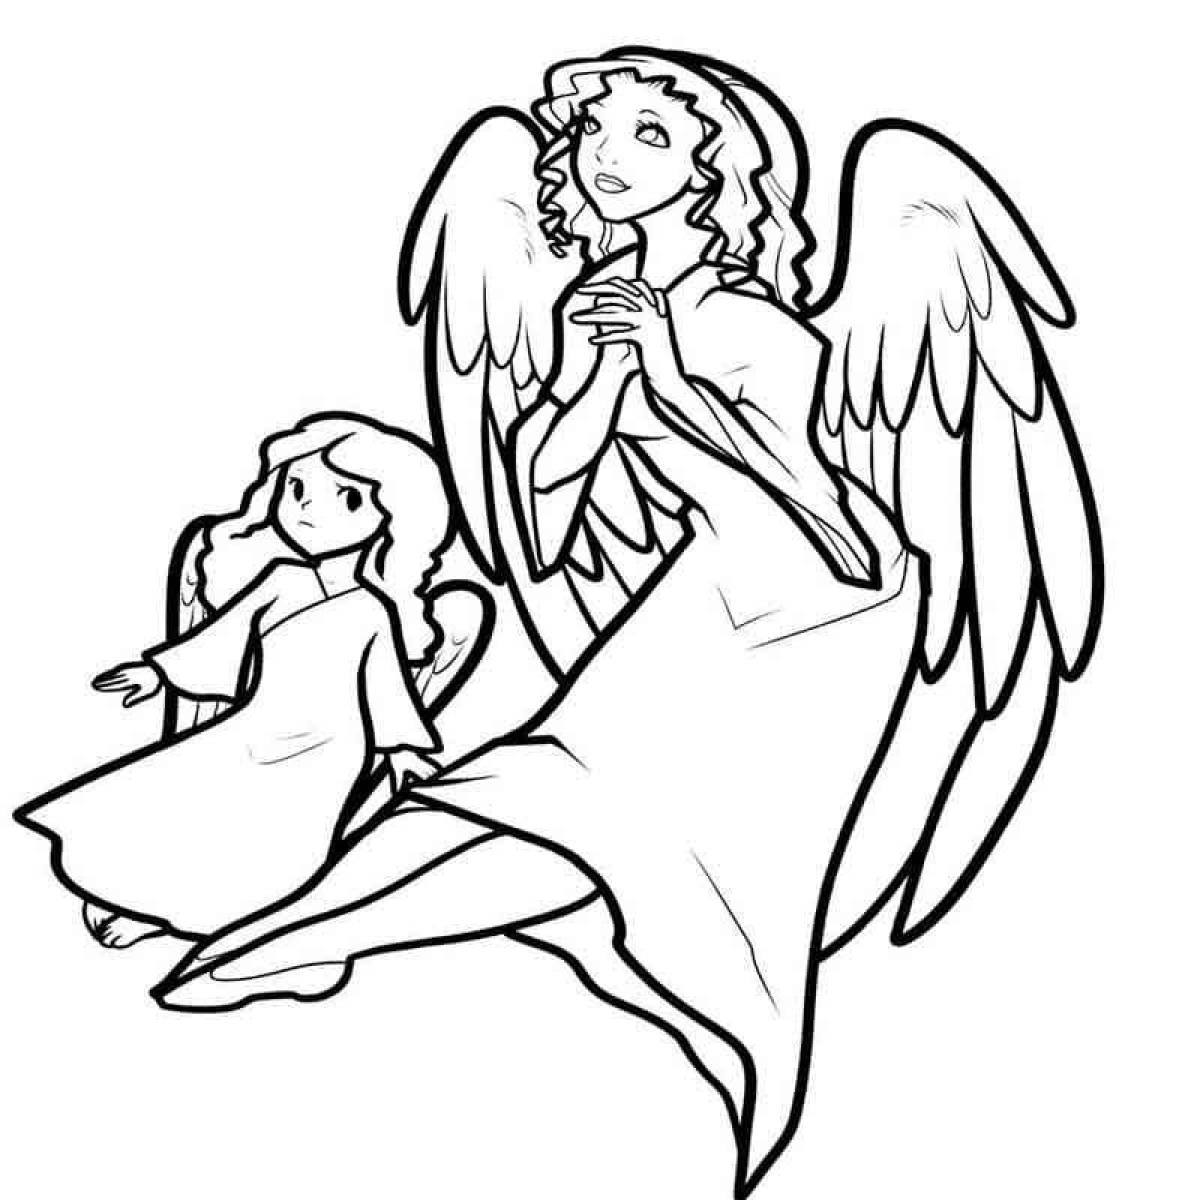 Angel guarded by heaven